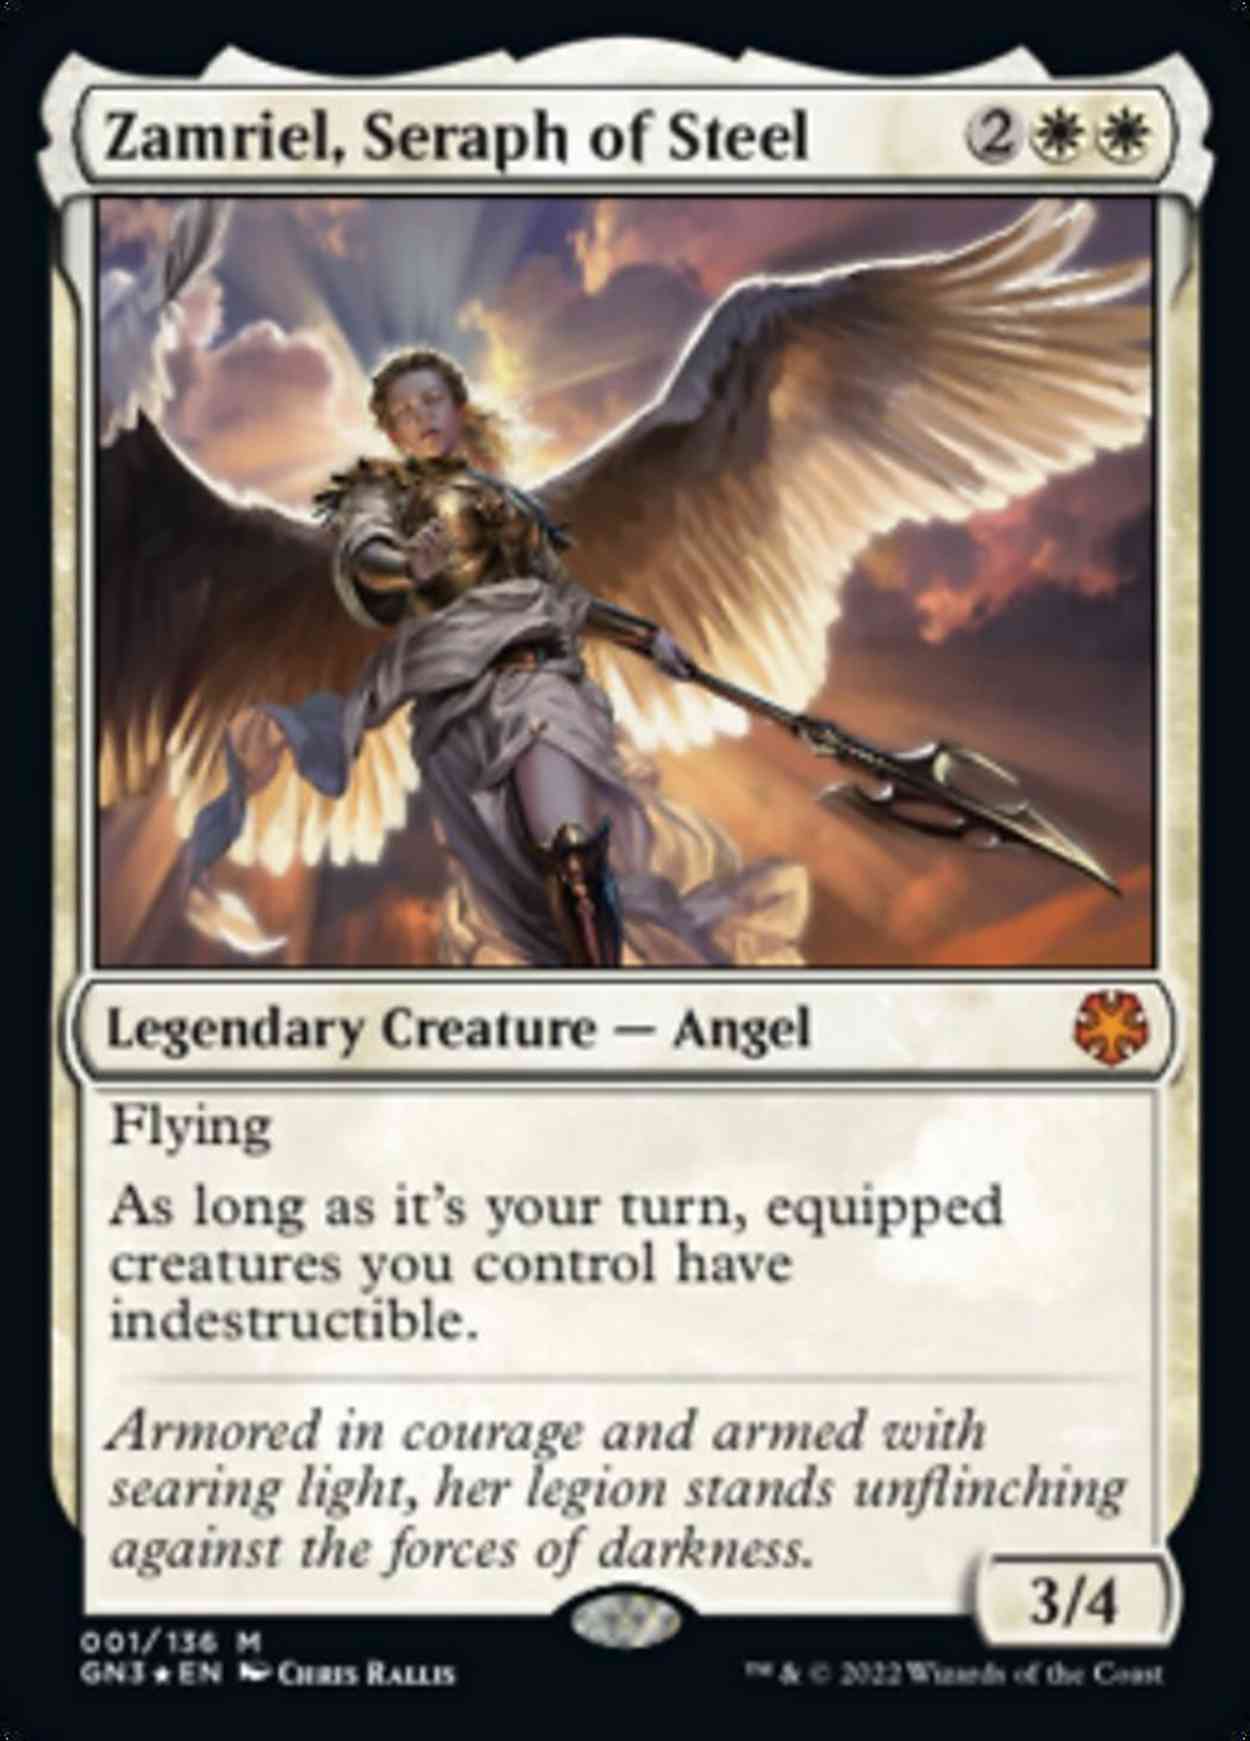 Zamriel, Seraph of Steel magic card front